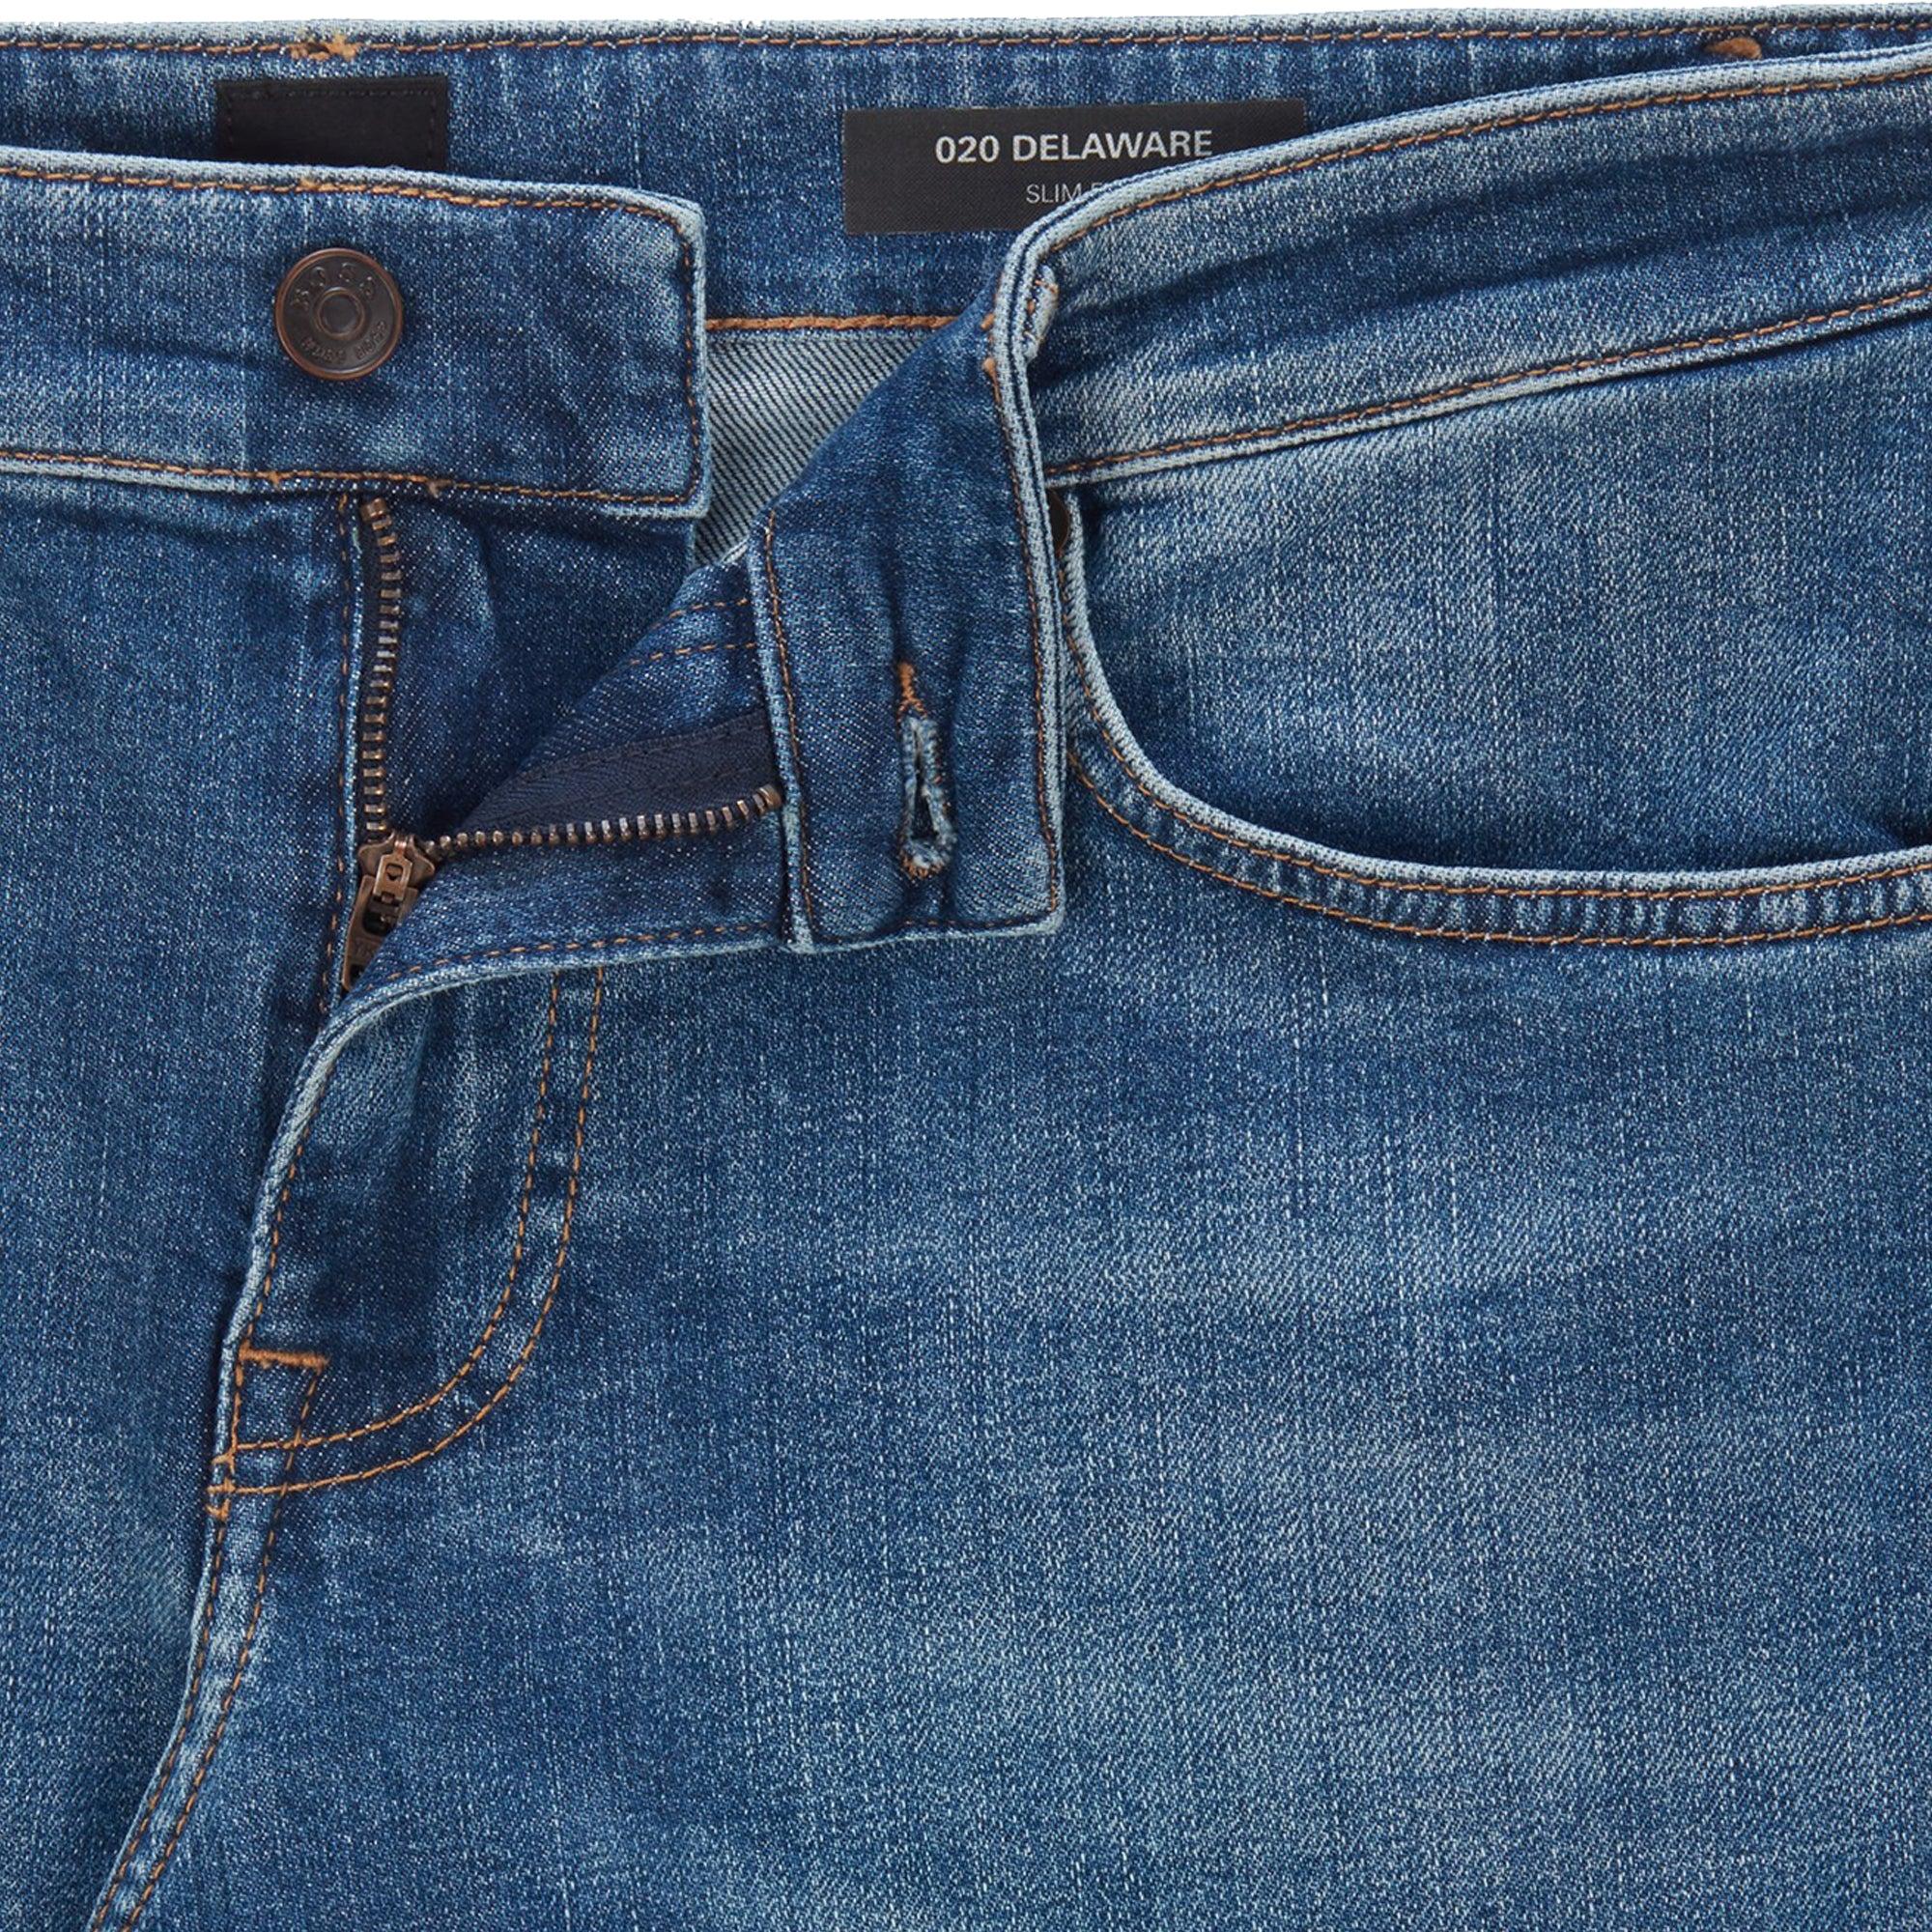 BOSS by HUGO BOSS Denim Delaware Slim Fit Jeans in Blue for Men - Save 4% |  Lyst